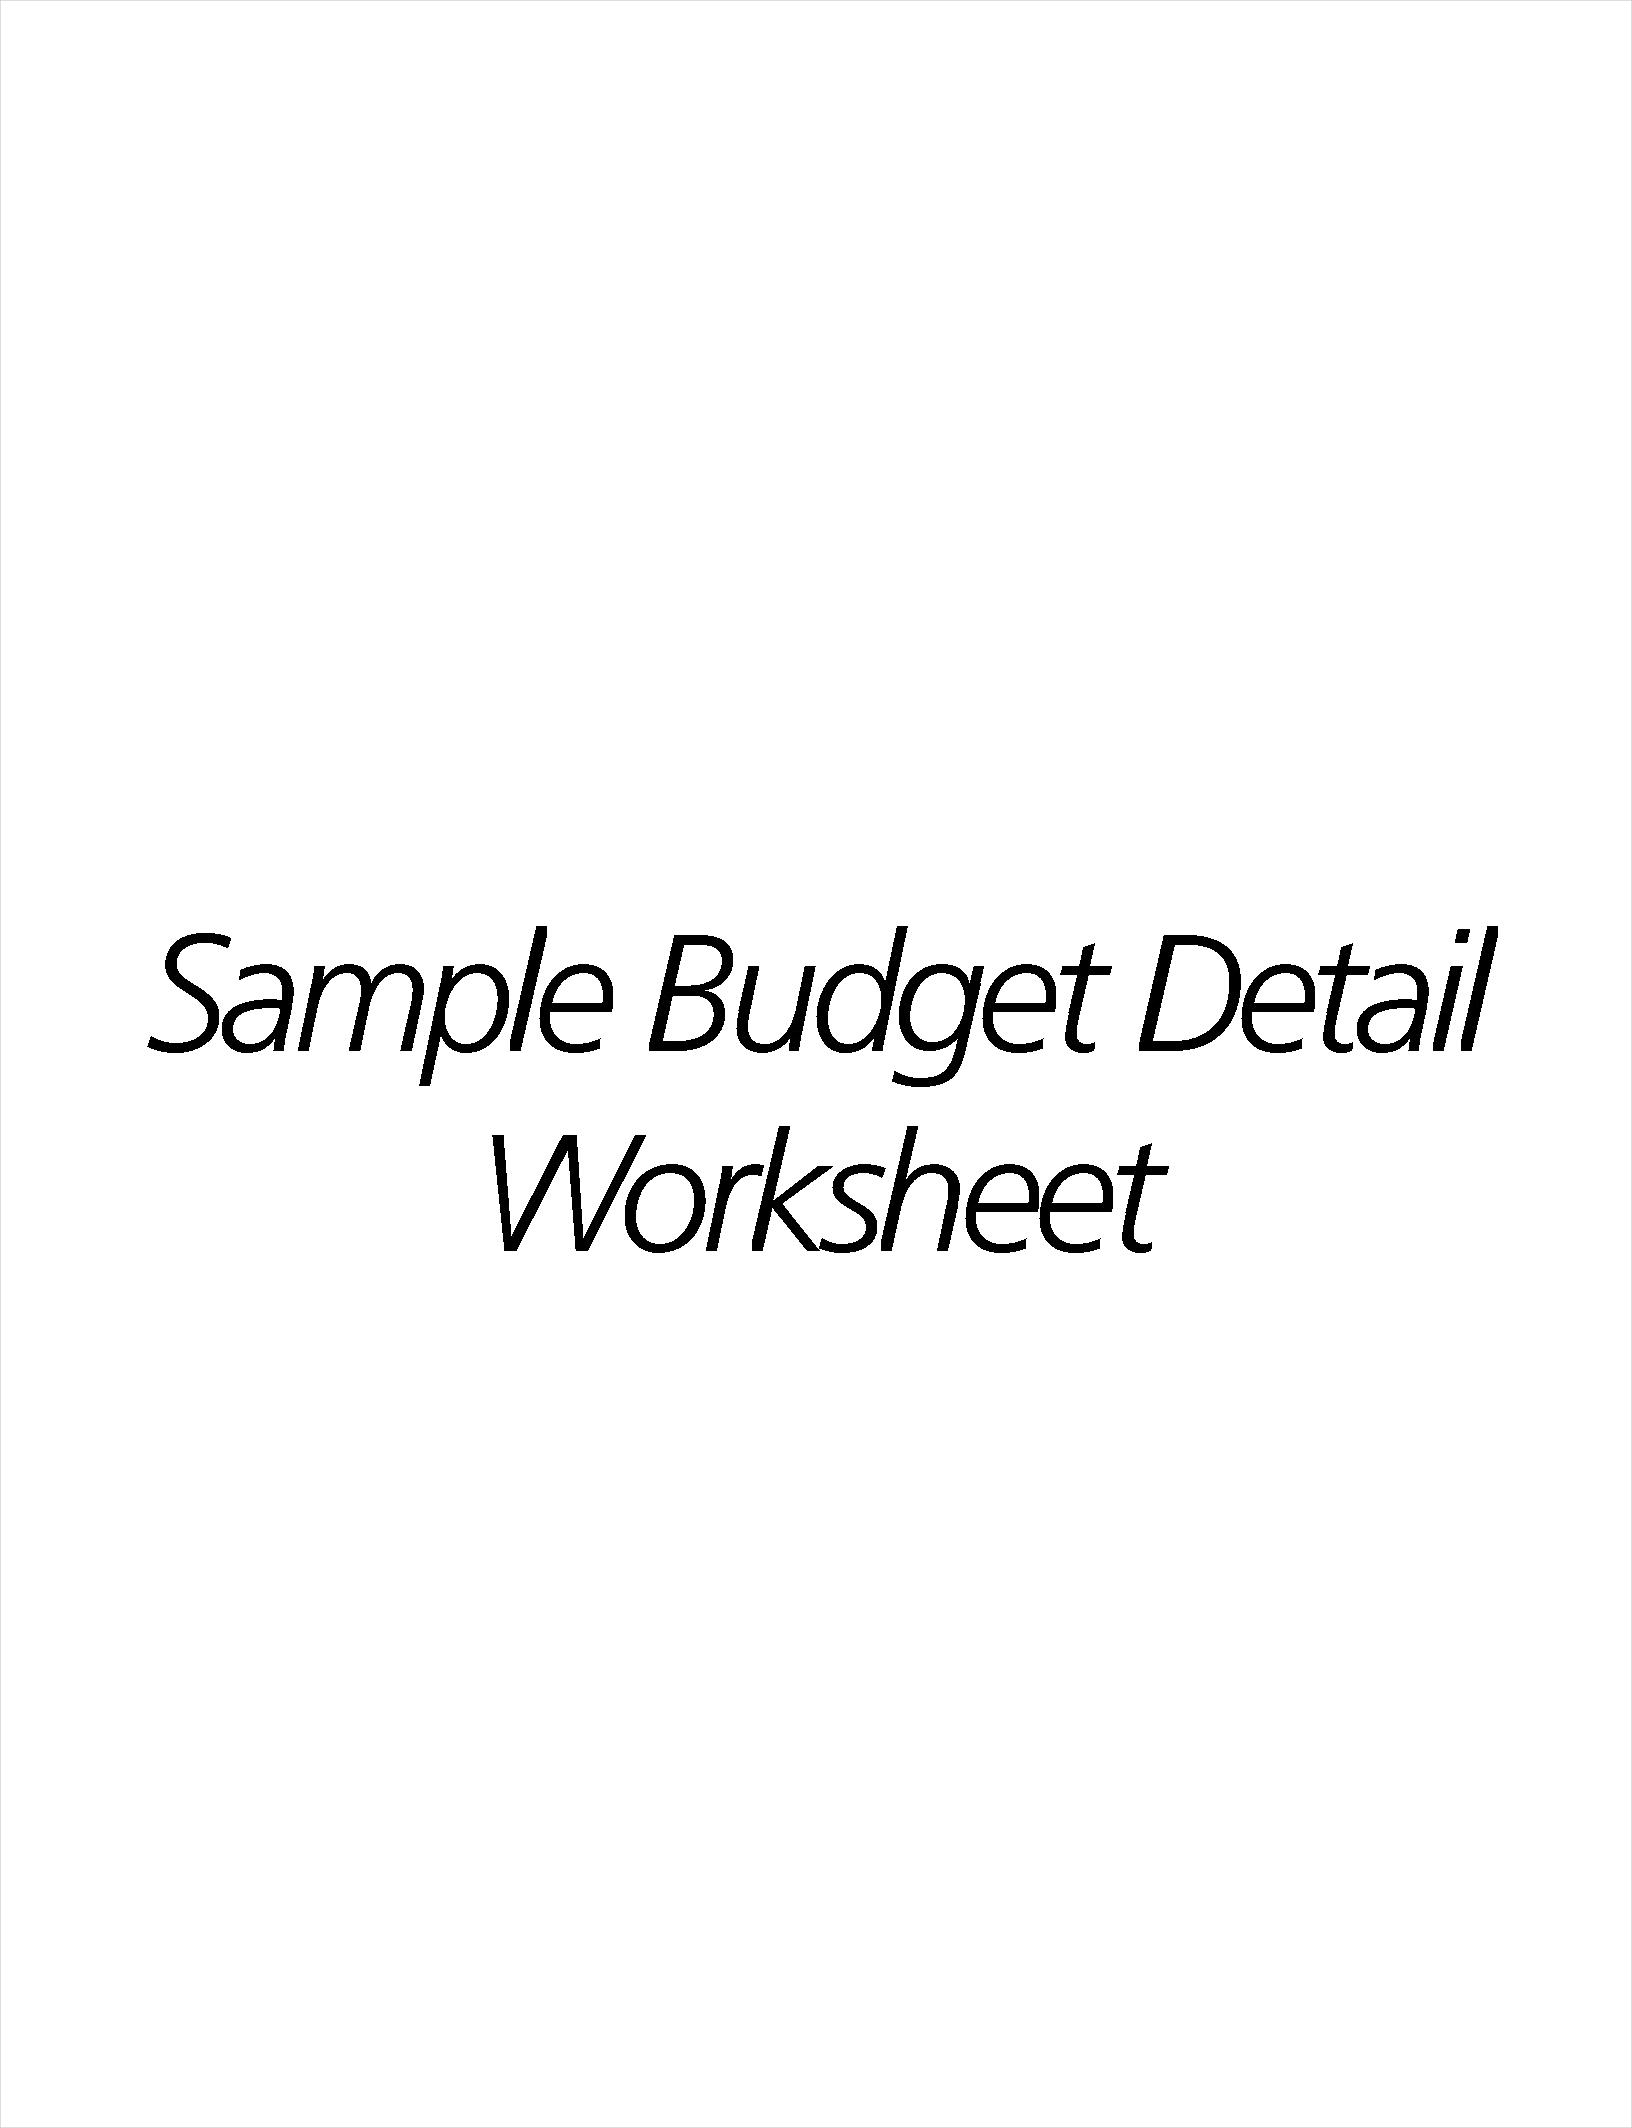 Sample Budget Detail Worksheet